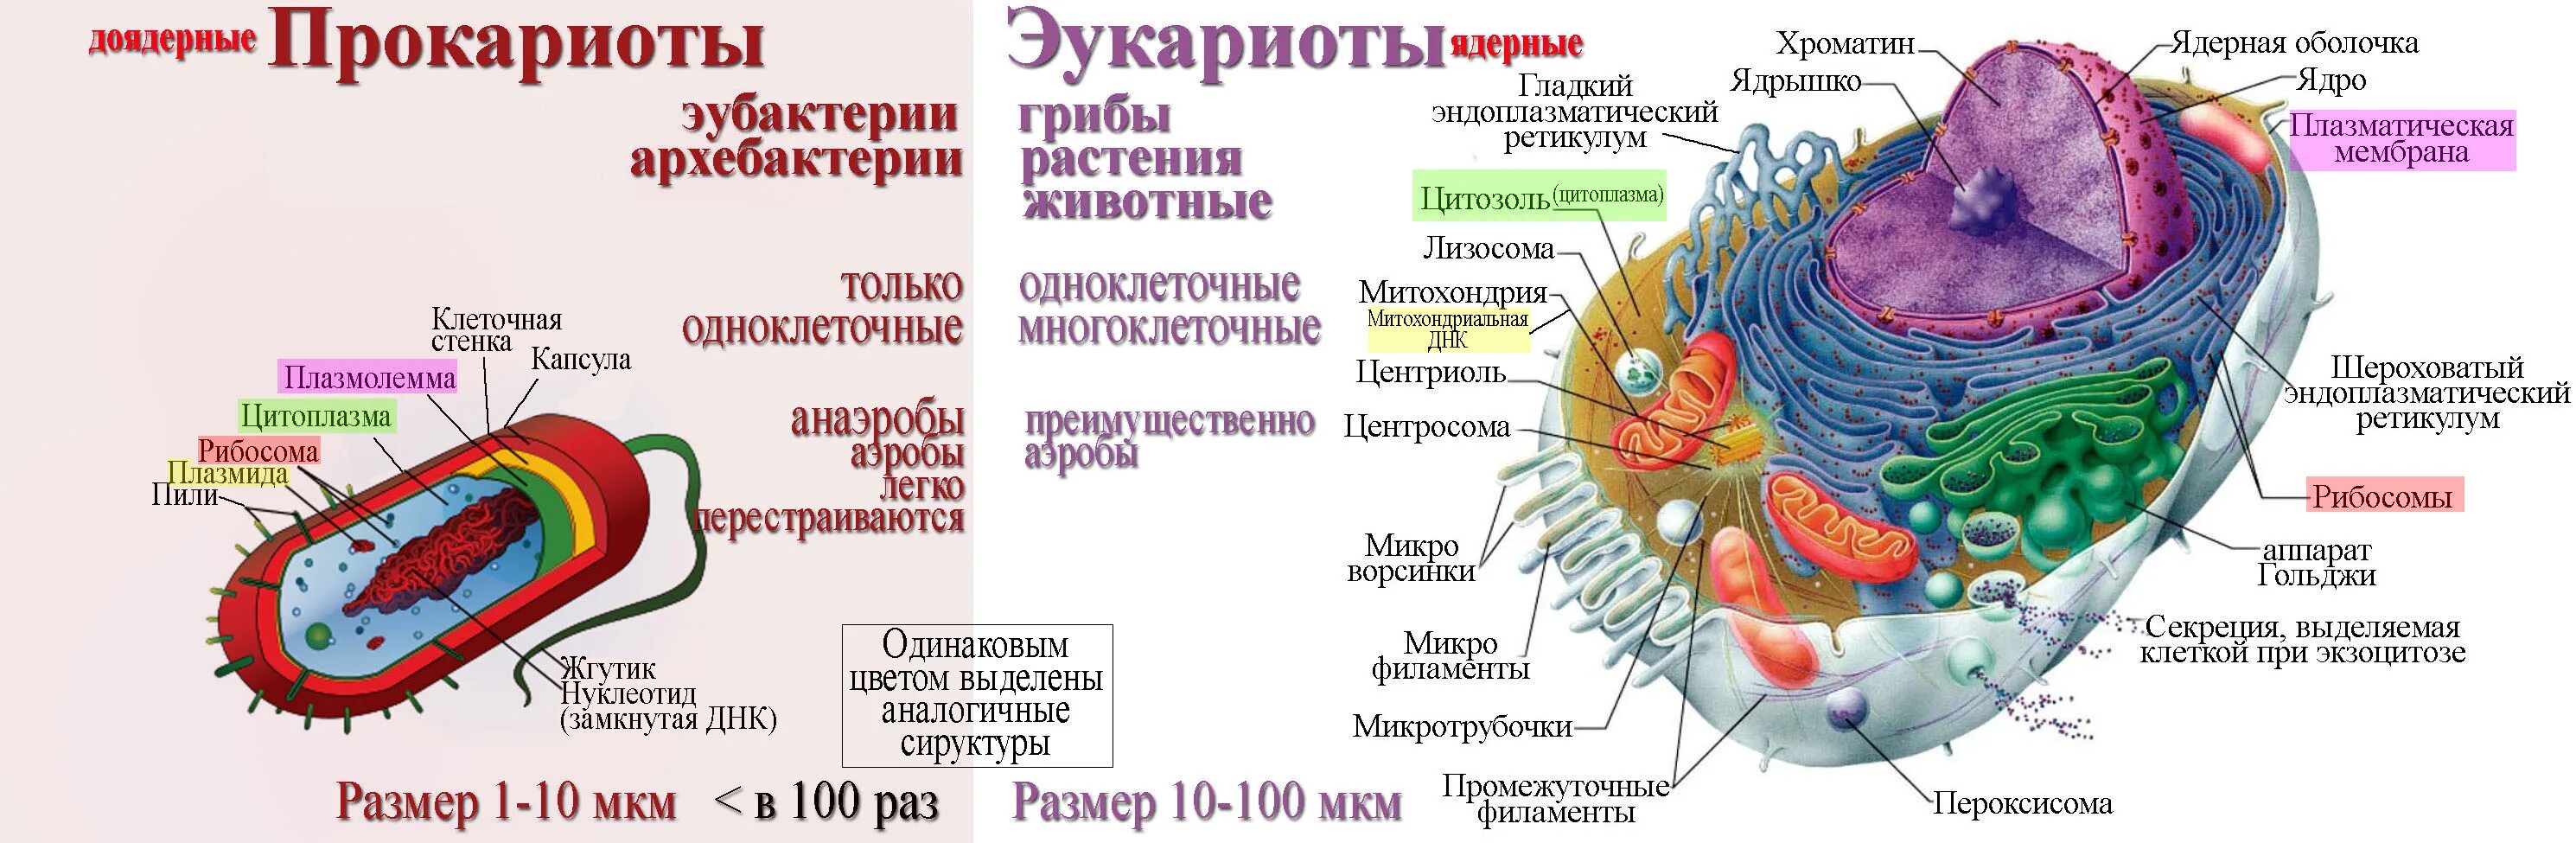 Хлоропласты ядро митохондрии лизосомы. Функции органоидов клетки эукариот. Органоиды эукариотической клетки строение. Функции органоидов прокариотической клетки. Строение одноклеточных эукариот.